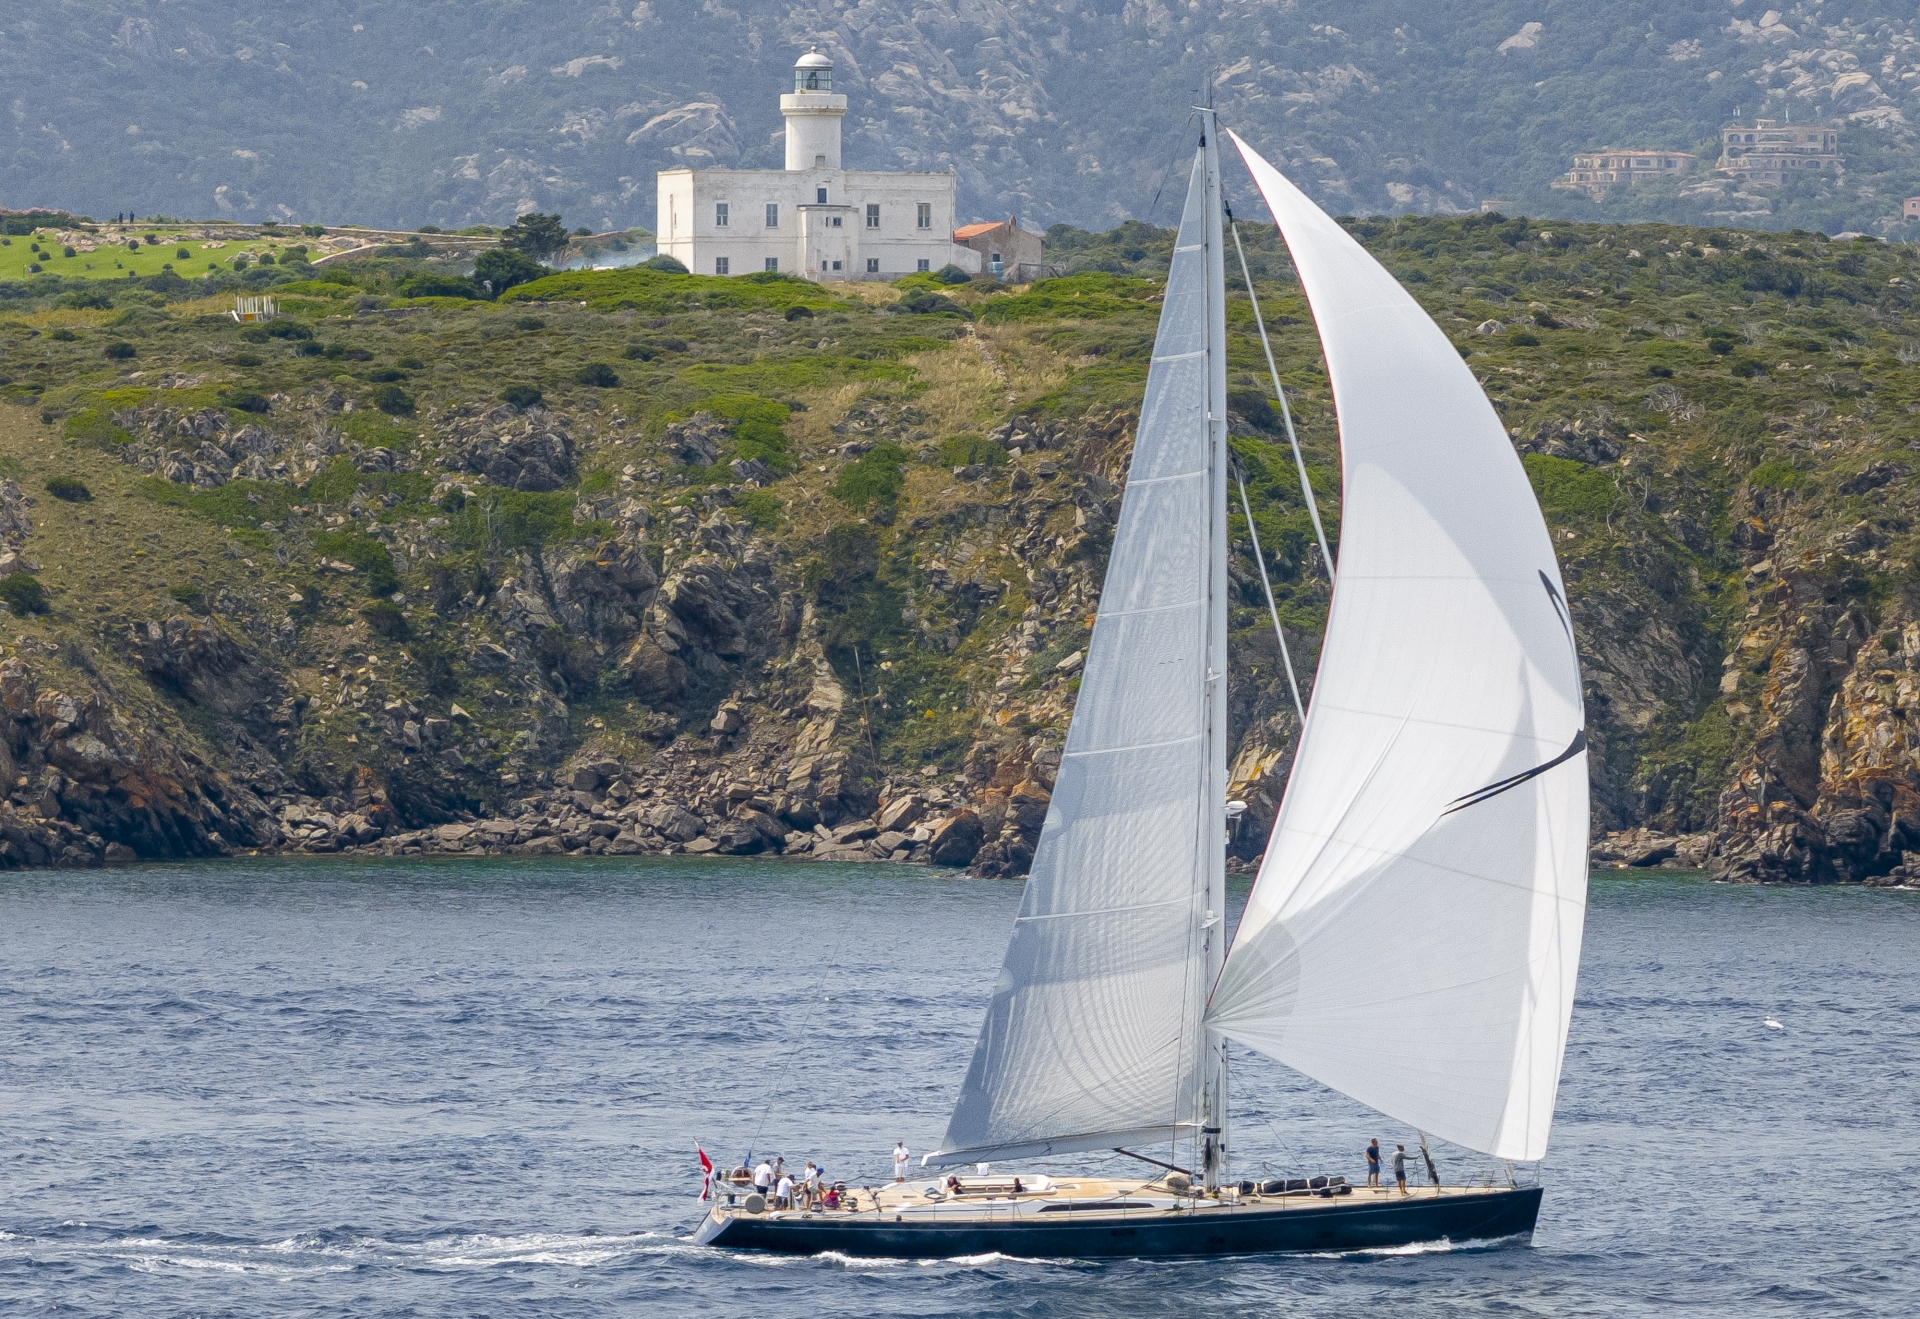 Giorgio Armani Superyacht Regatta, Inoui and V lead their respective classes - NEWS - Yacht Club Costa Smeralda